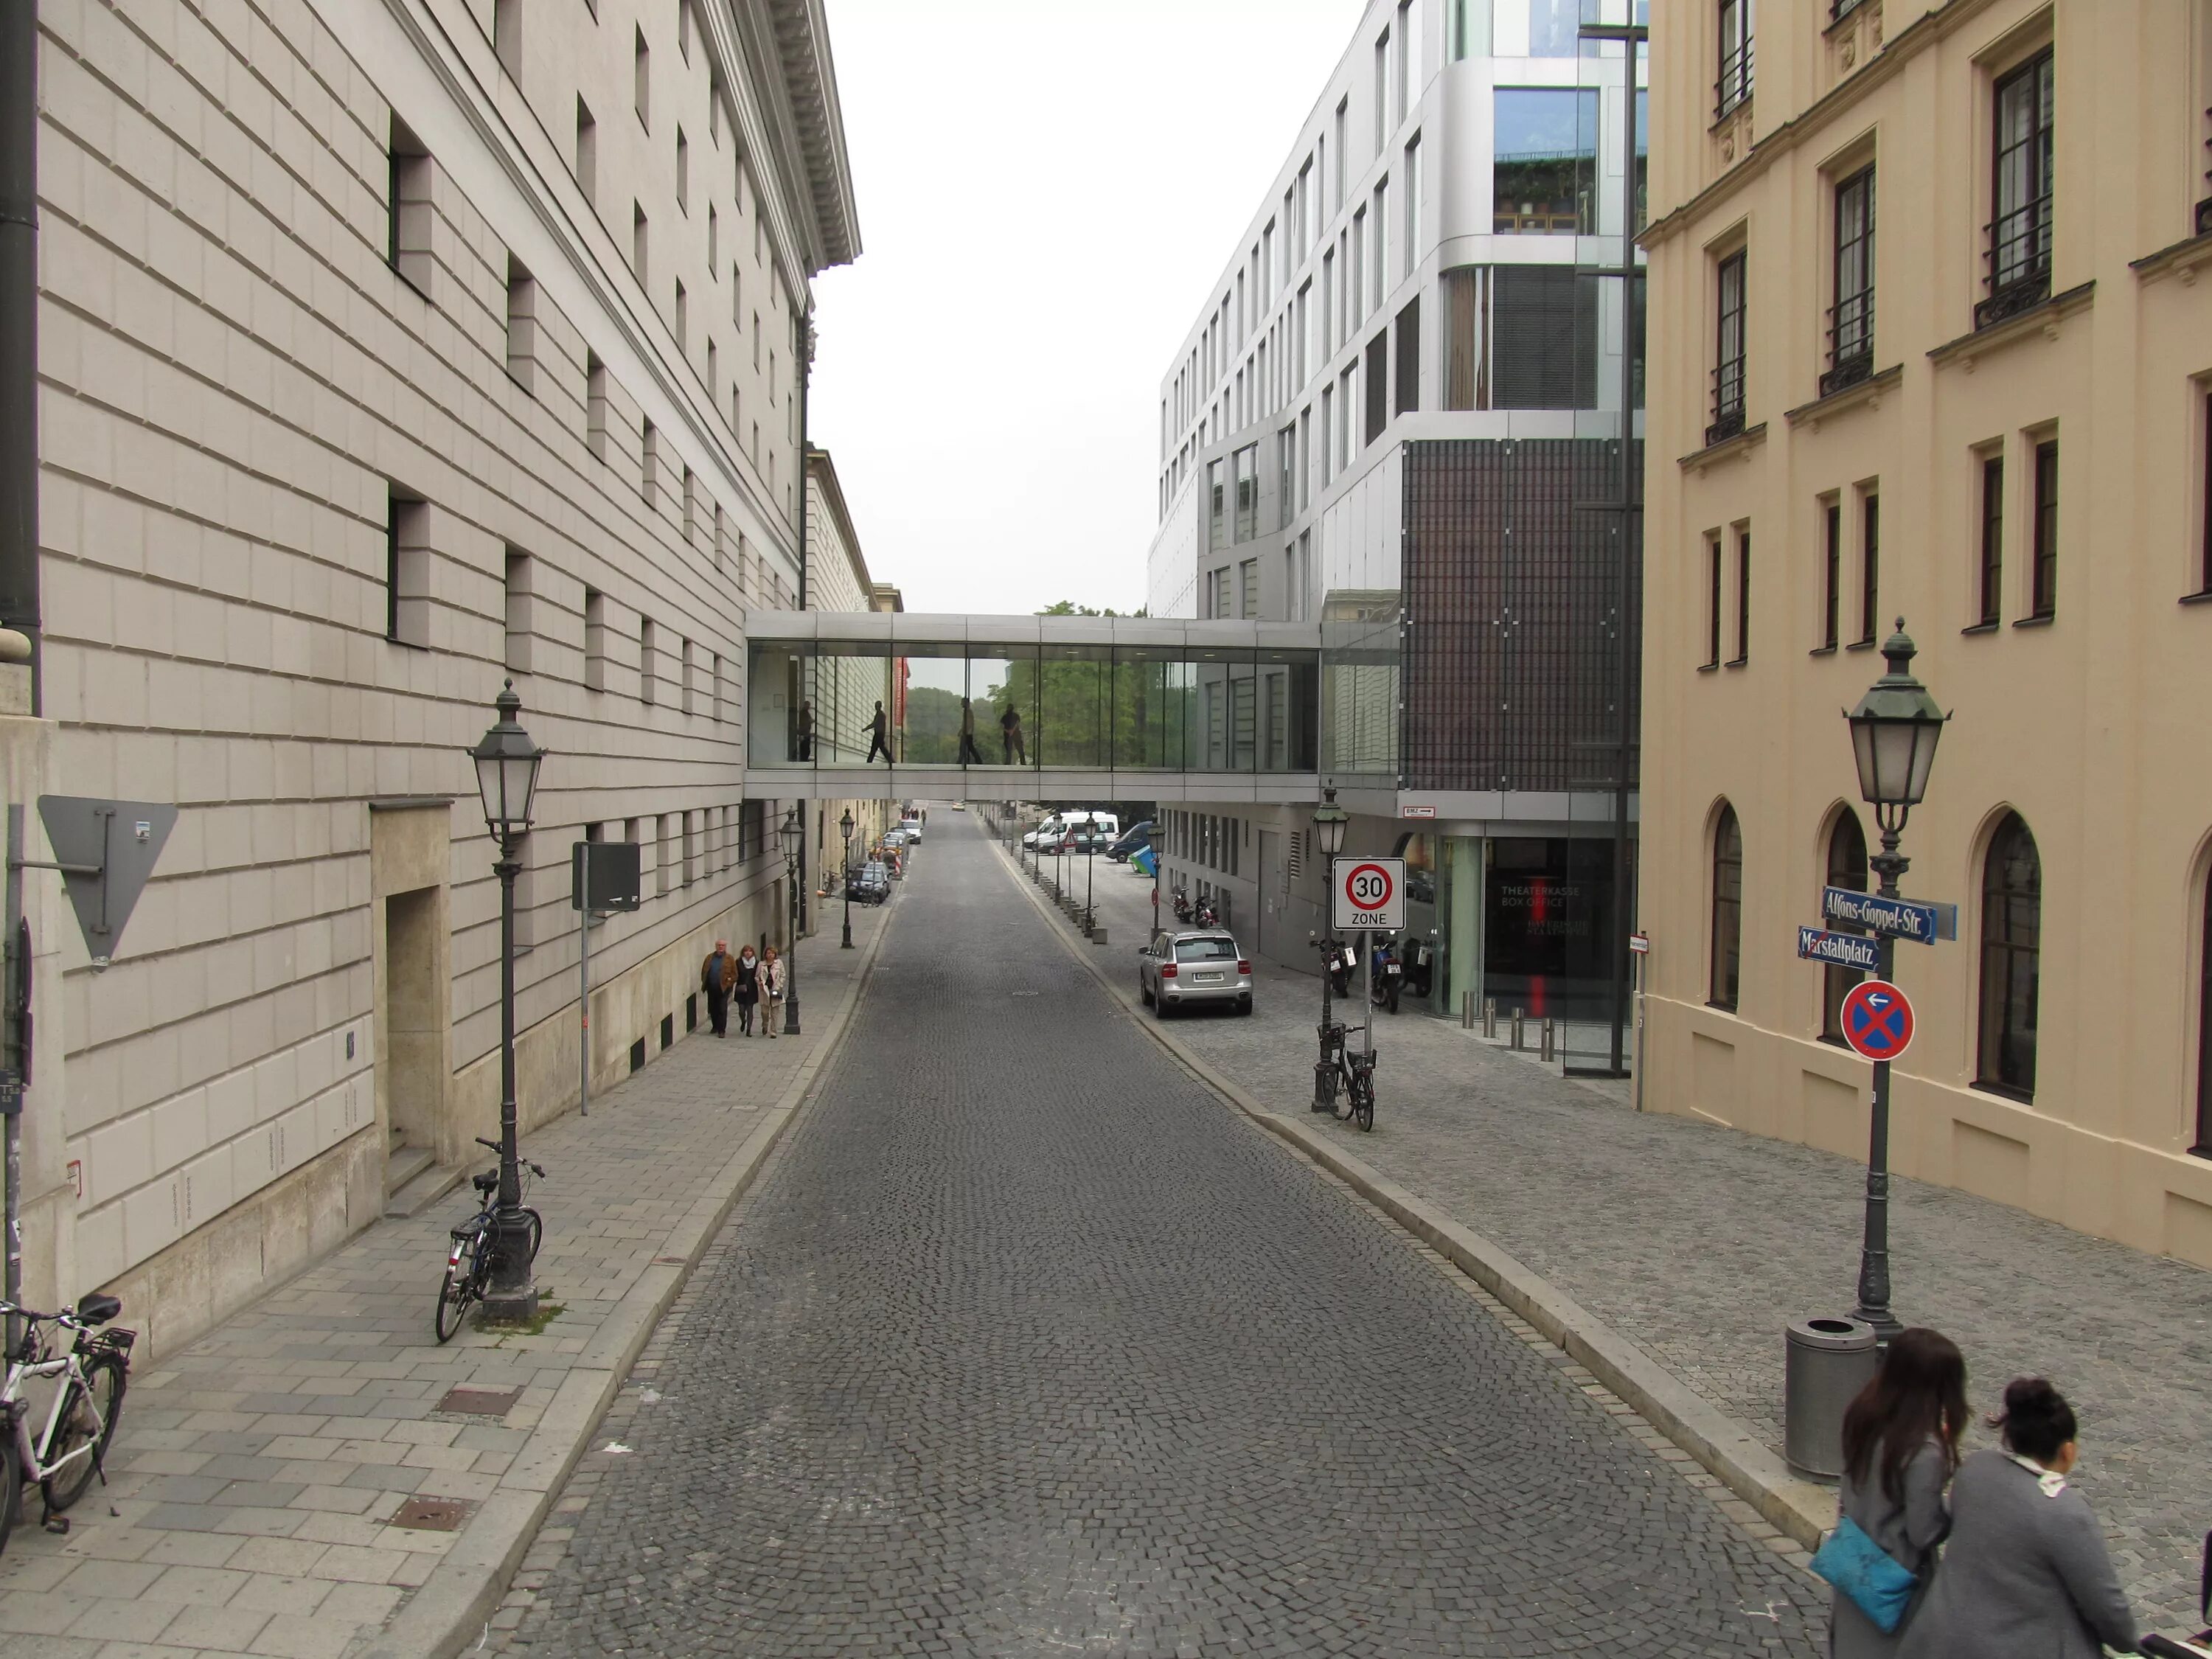 Переход между. Проход между зданиями. Здание на улице. Перекиды между зданиями. Навесной коридор между зданиями.